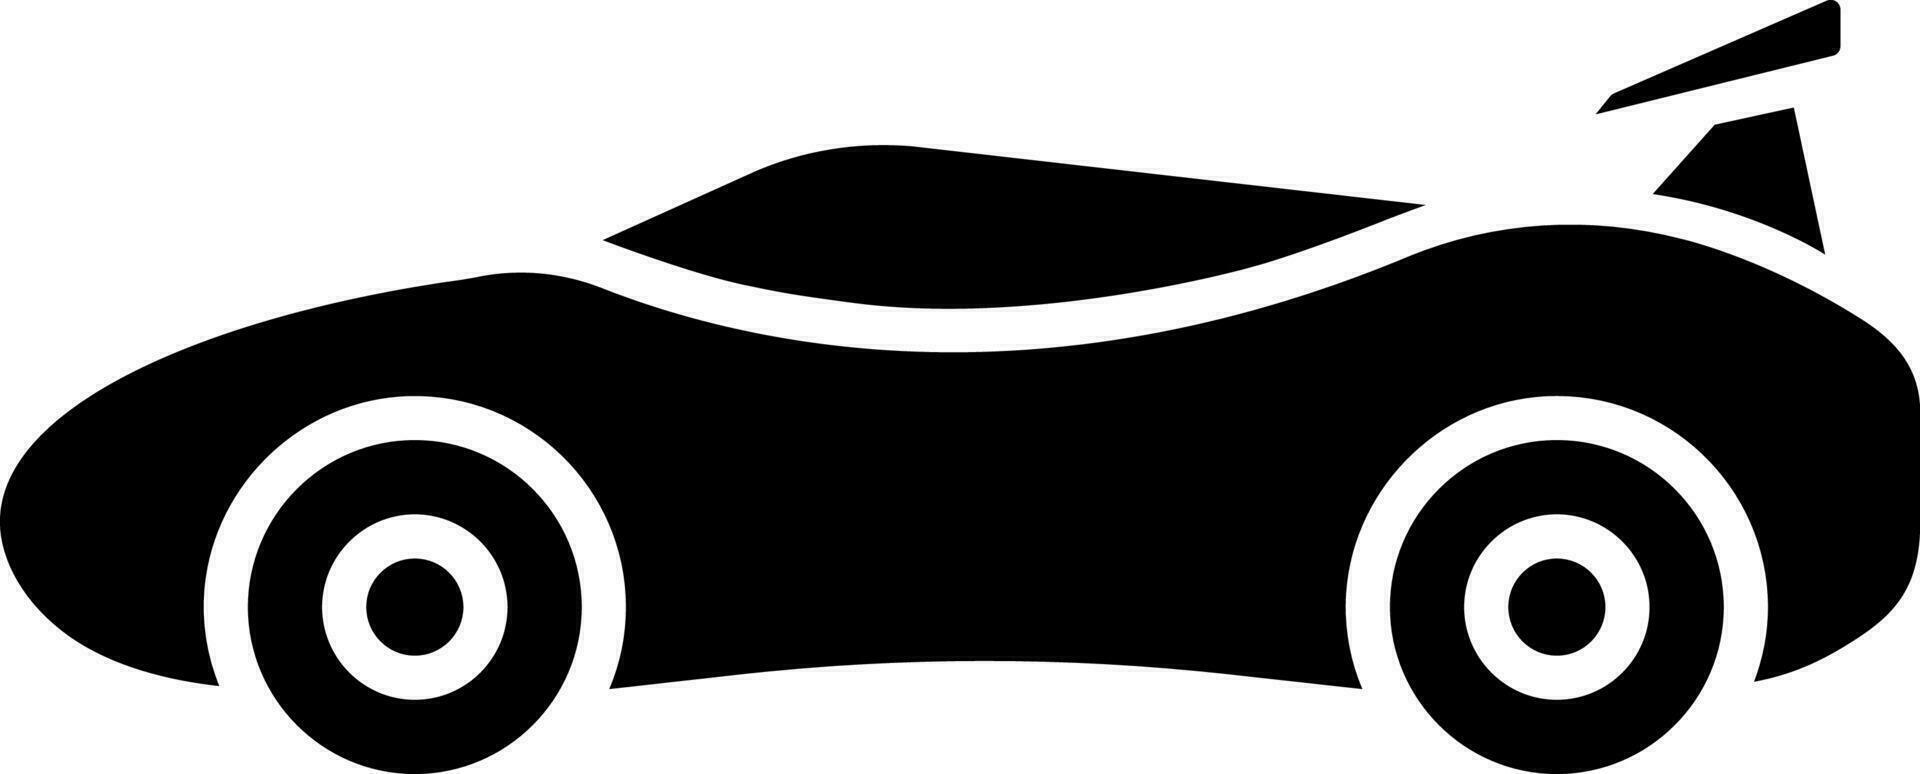 Vector illustration of car icon.